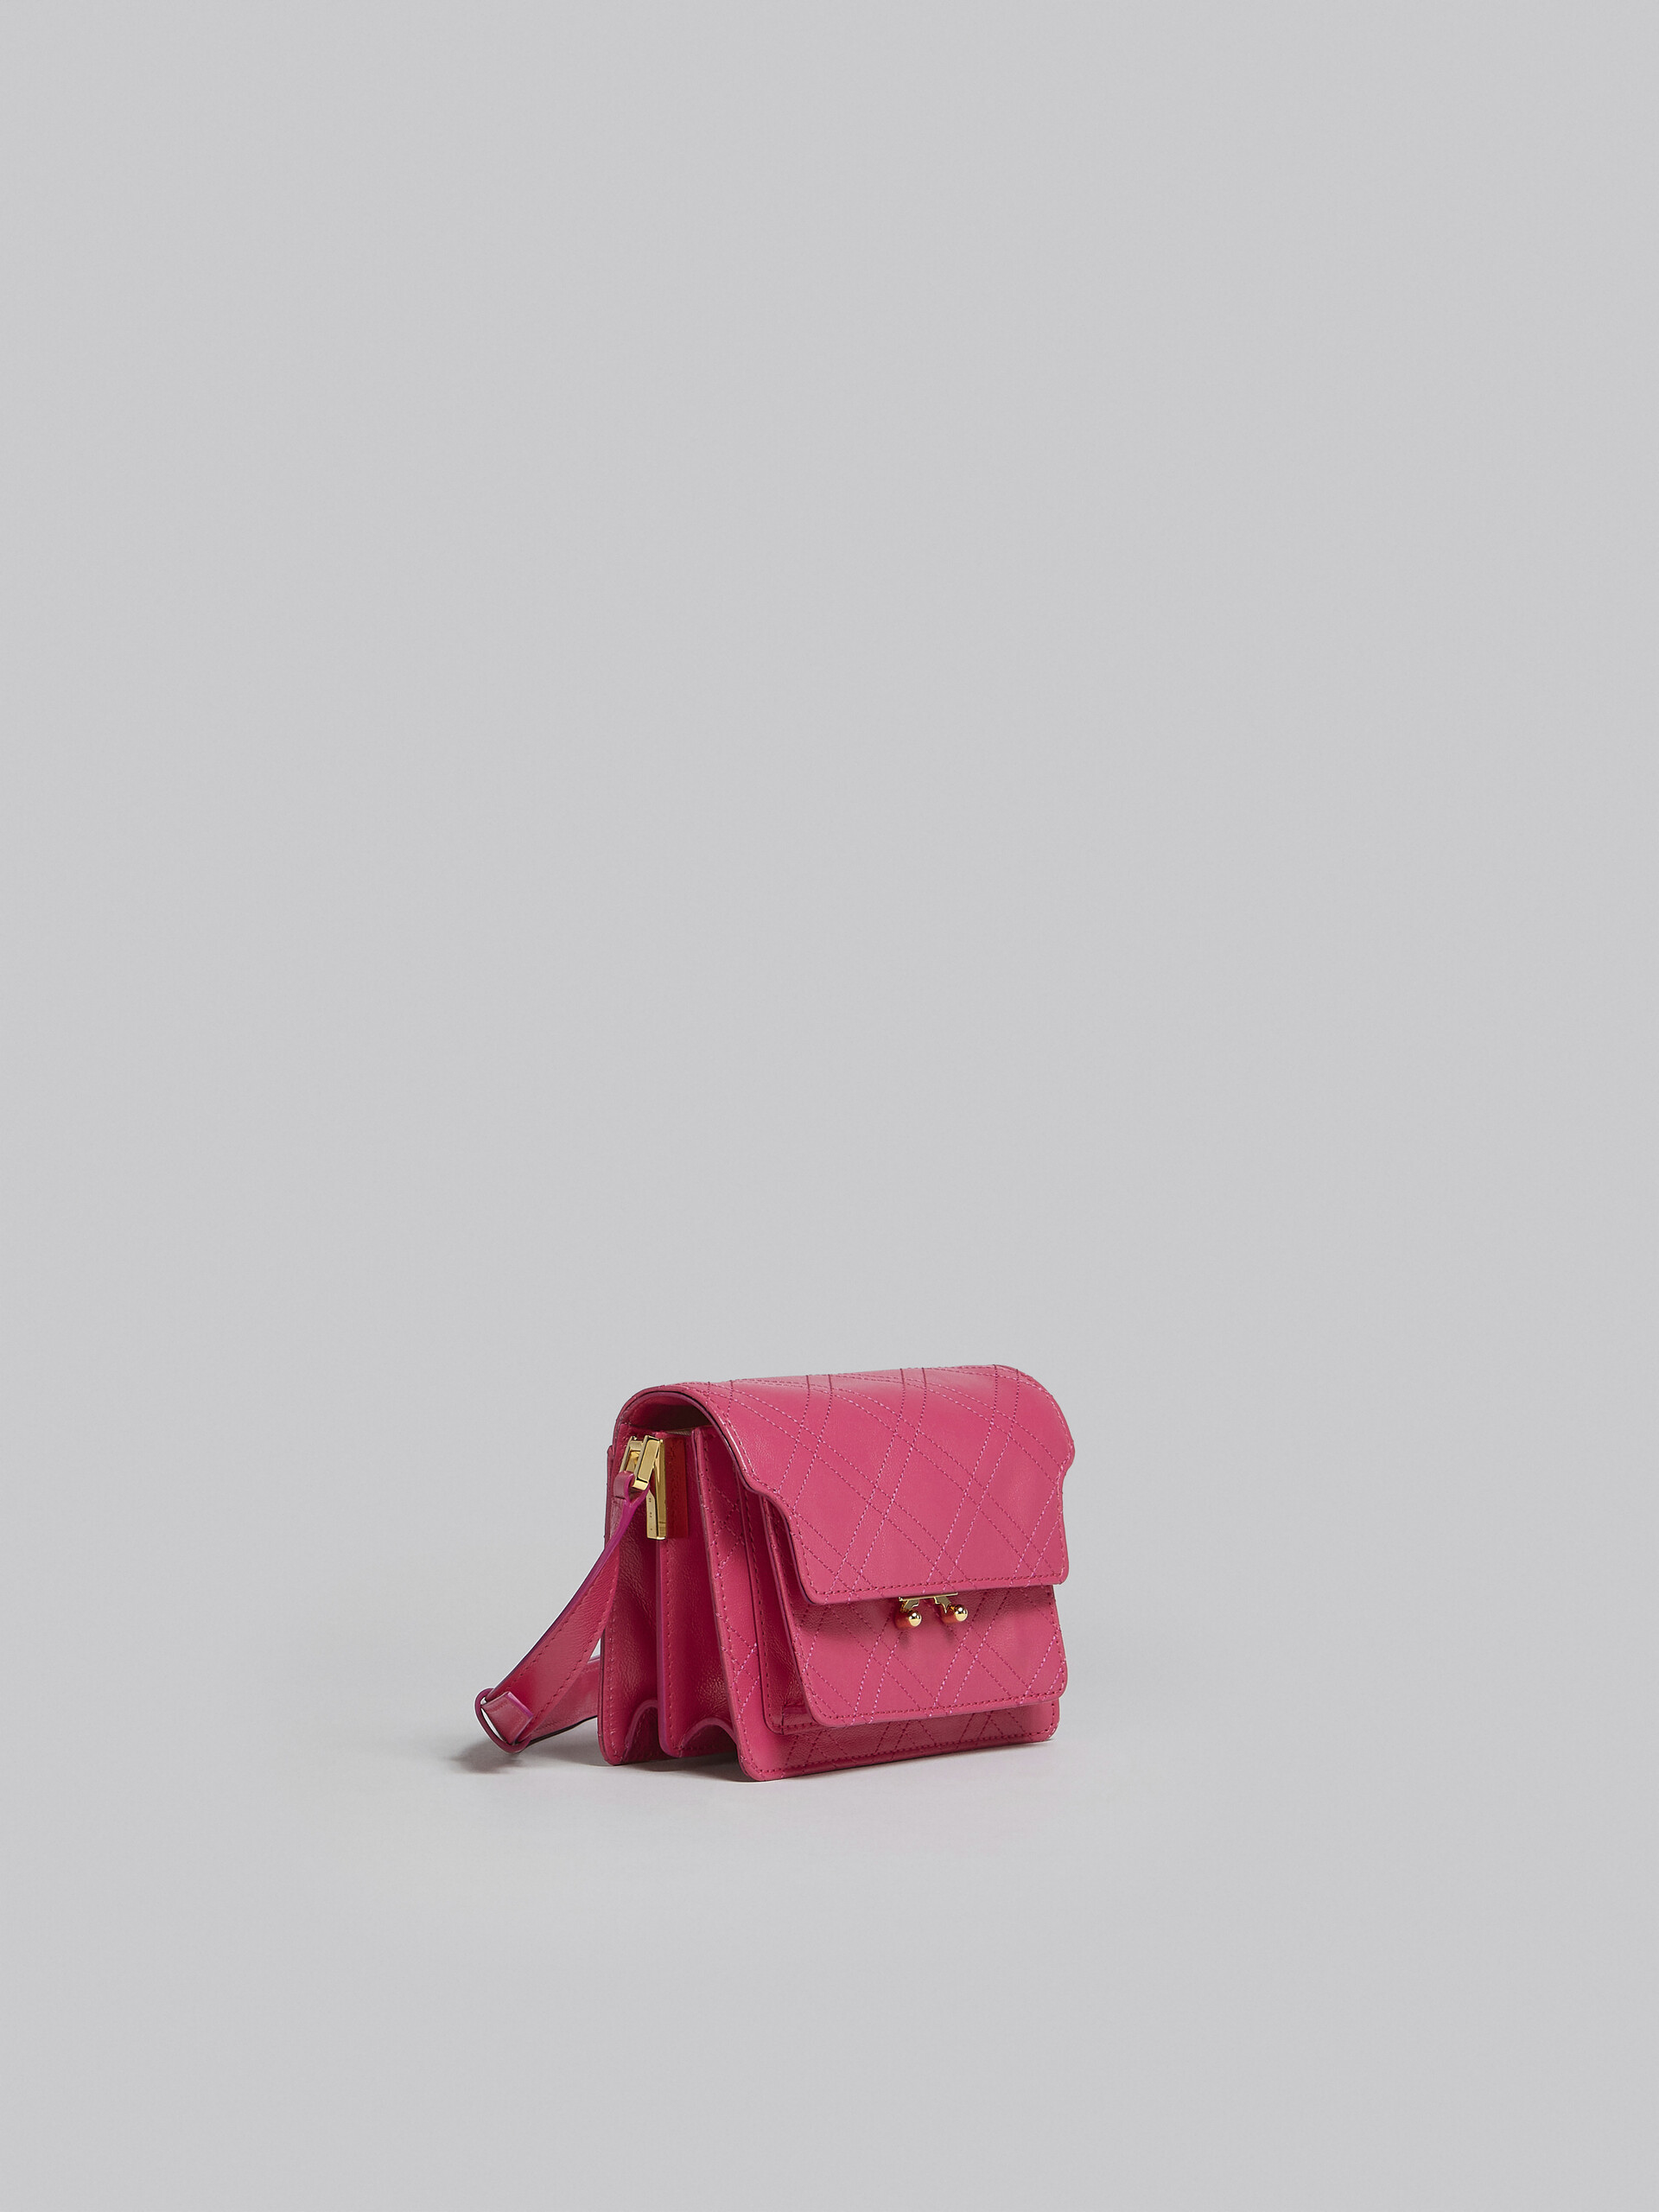 Trunk Soft Mini Bag in fuchsia leather - Shoulder Bag - Image 6